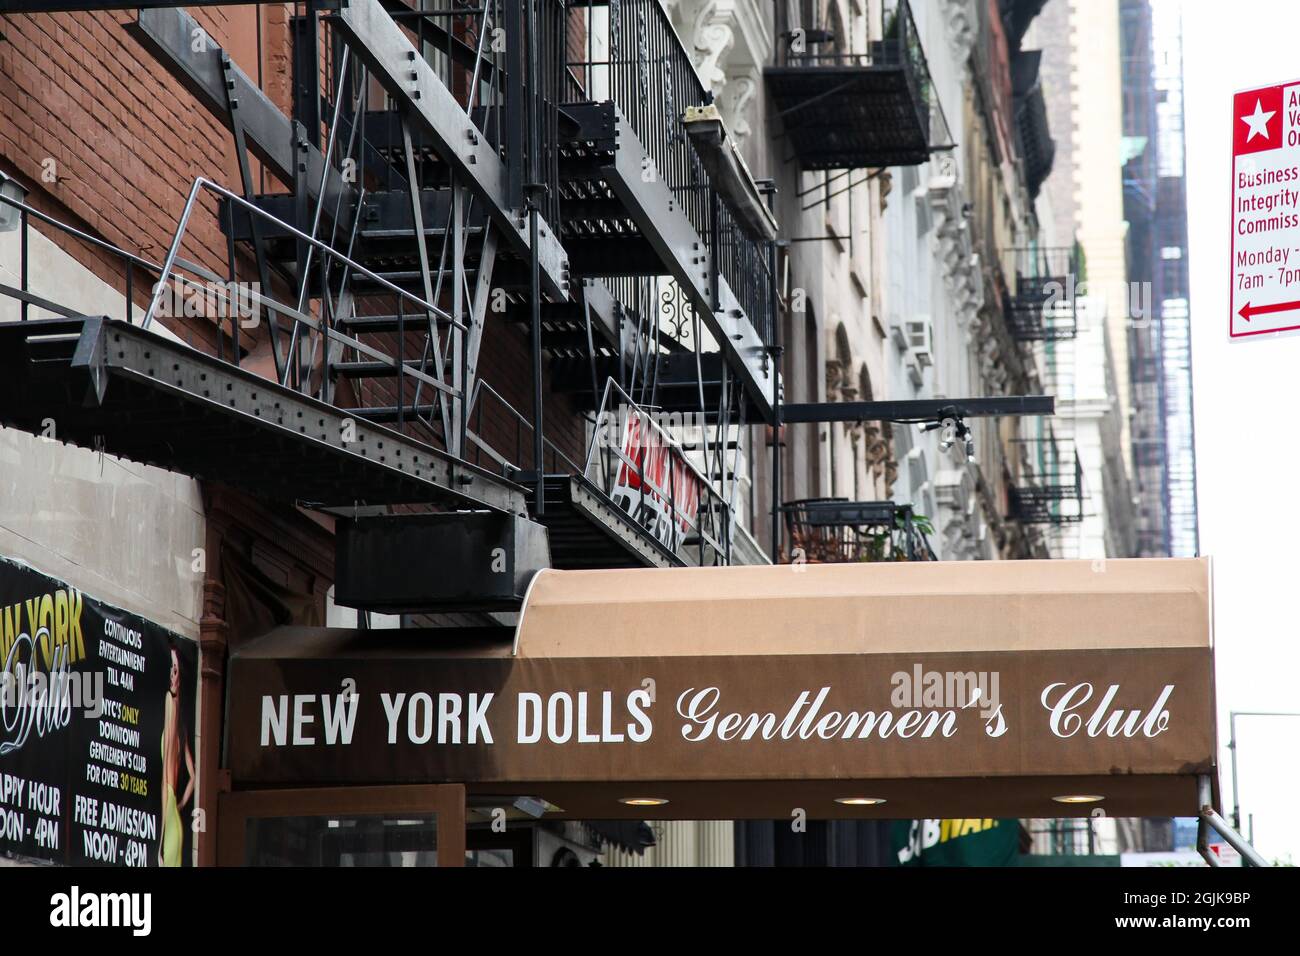 NEW YORK, NY, USA - APRIL 26, 2017: New York Dolls gentlemens club entrance sign Stock Photo